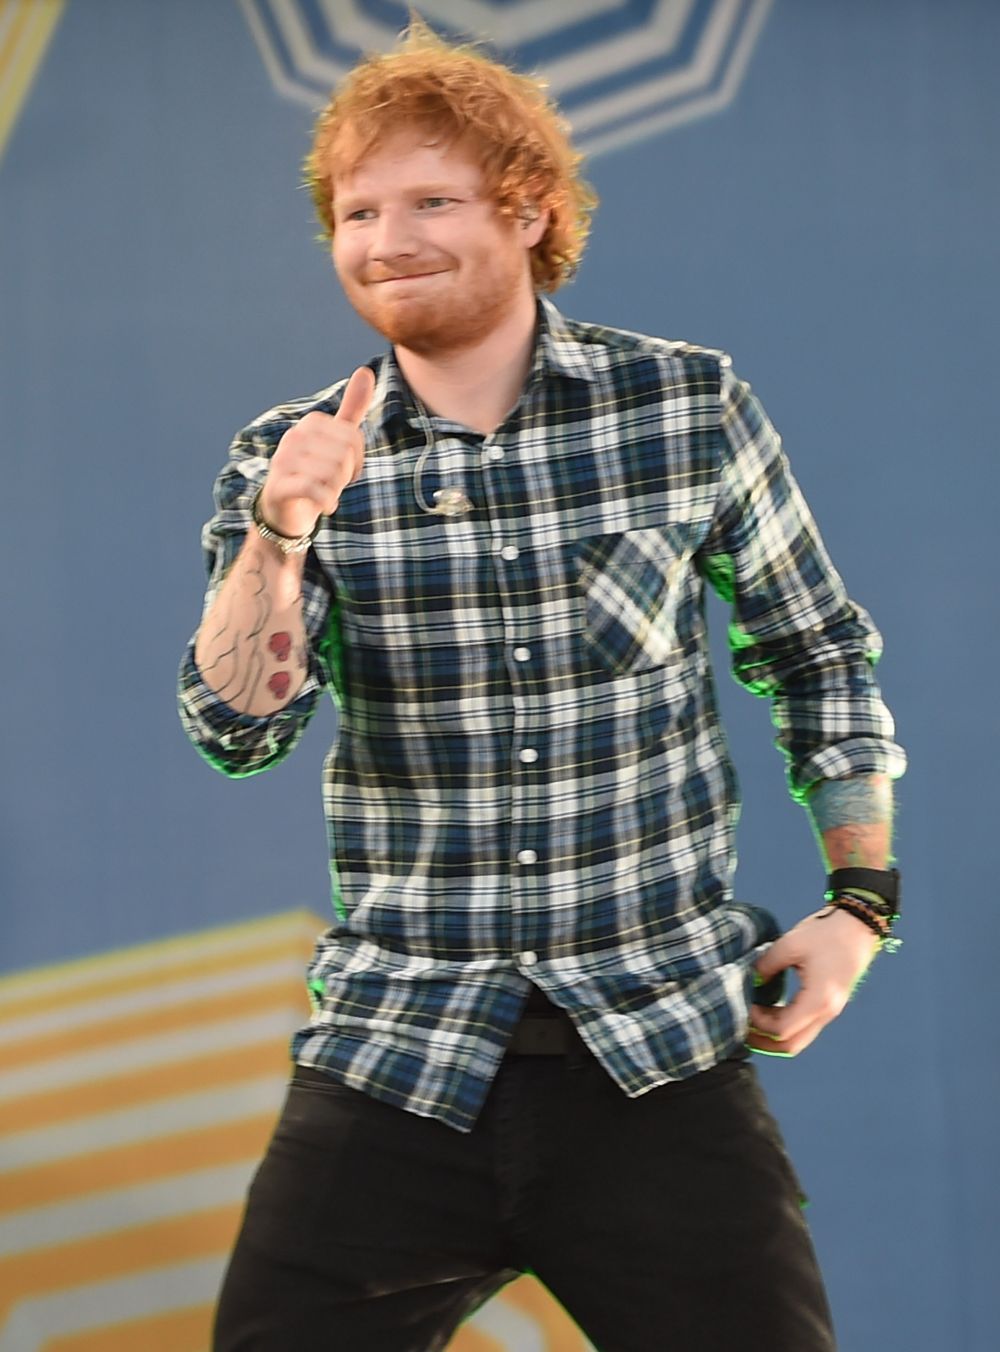 Milioane de admiratoare s-au indragostit de melodiile lui, dar putini stiu ca Ed Sheeran are iubita. Cum arata tanara